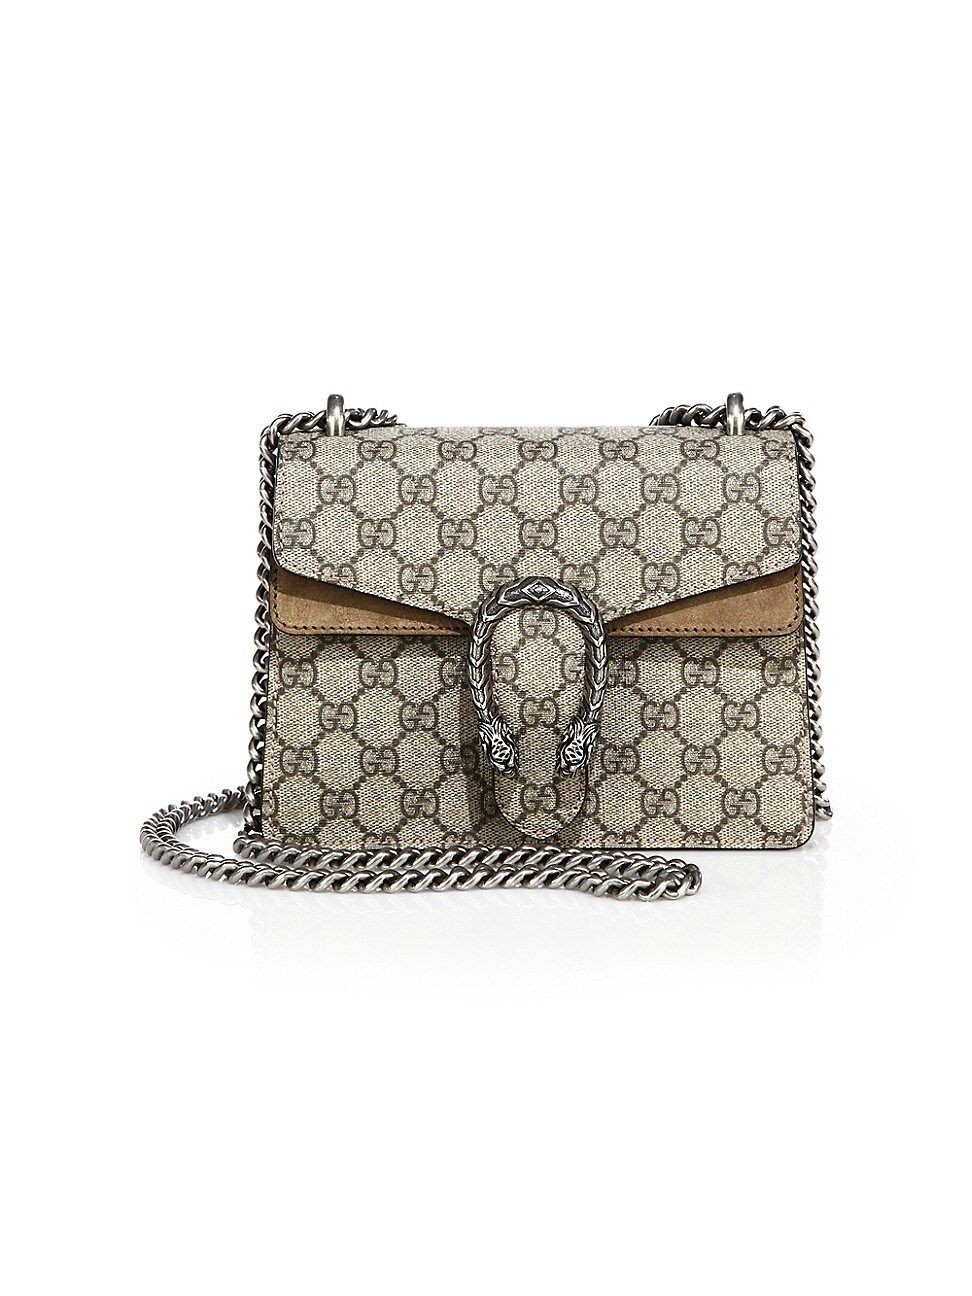 Gucci Women's Dionysus GG Supreme Mini Bag - Beige | Saks Fifth Avenue